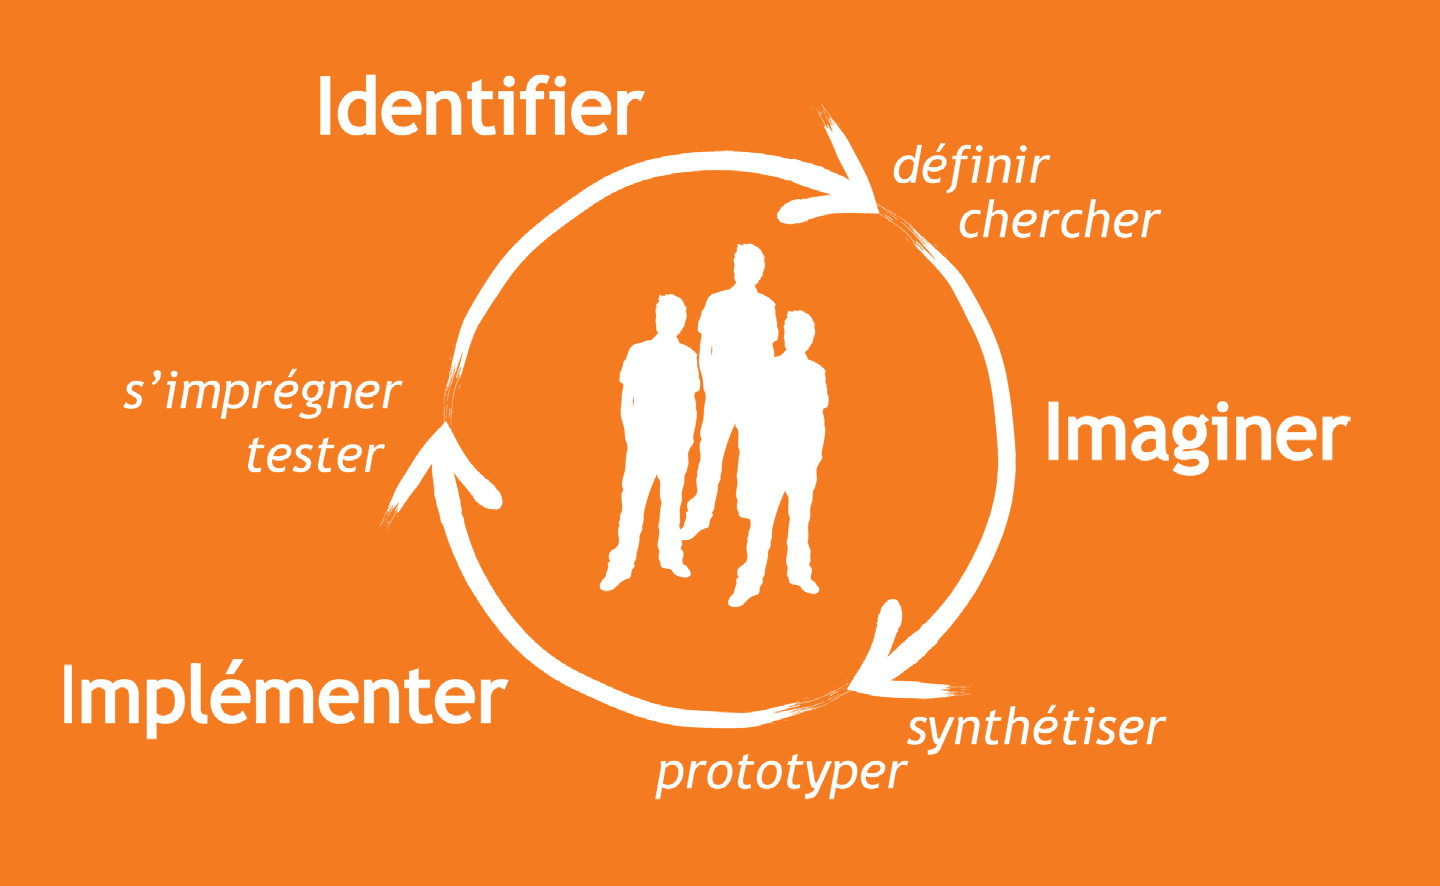 schema identifier définir chercher imaginer synthétiser prototyper implémenter tester s'imprégner